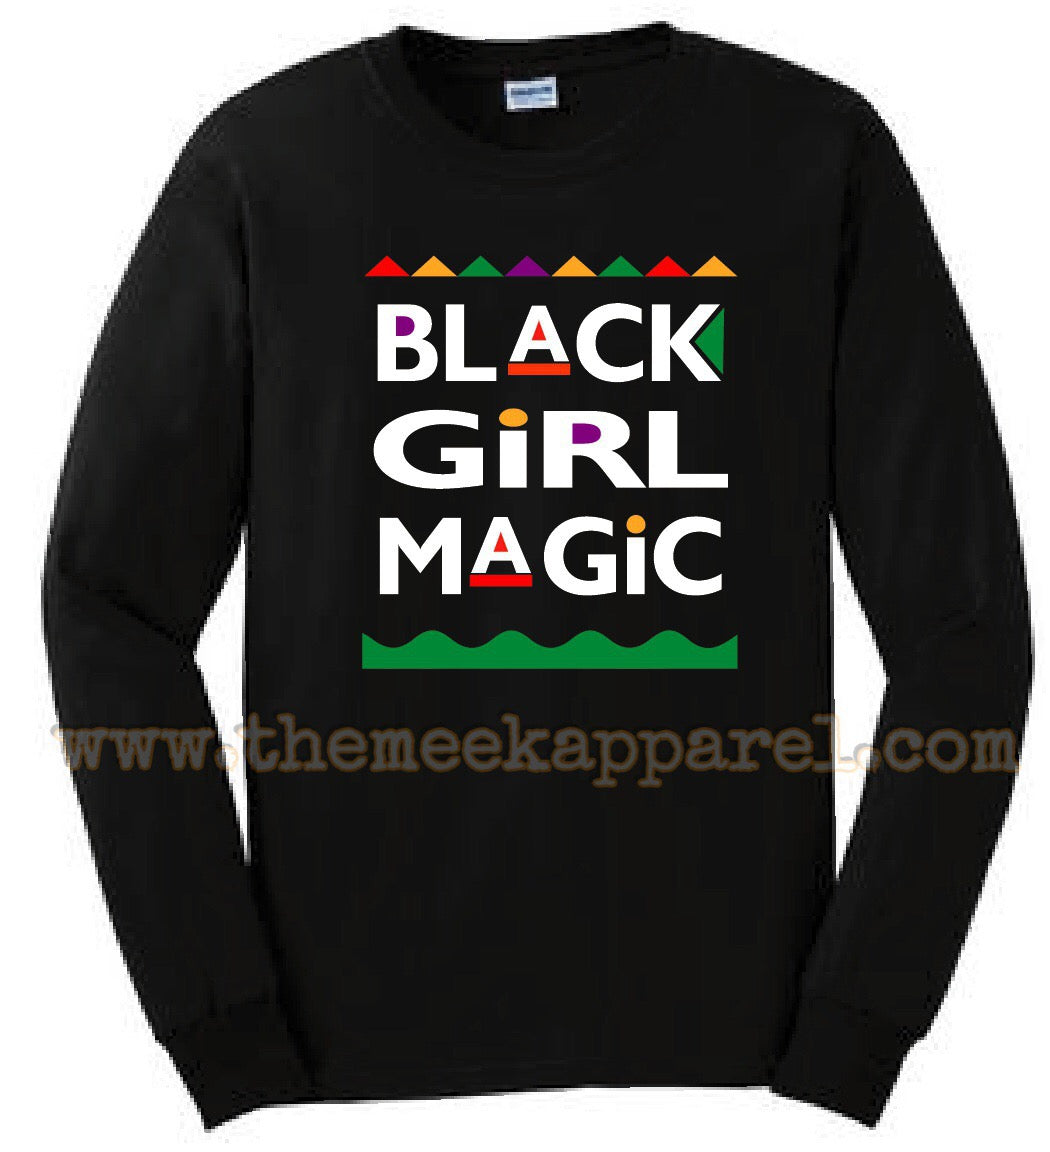 BLM - Black Girl Magic 90's Edition Shirt